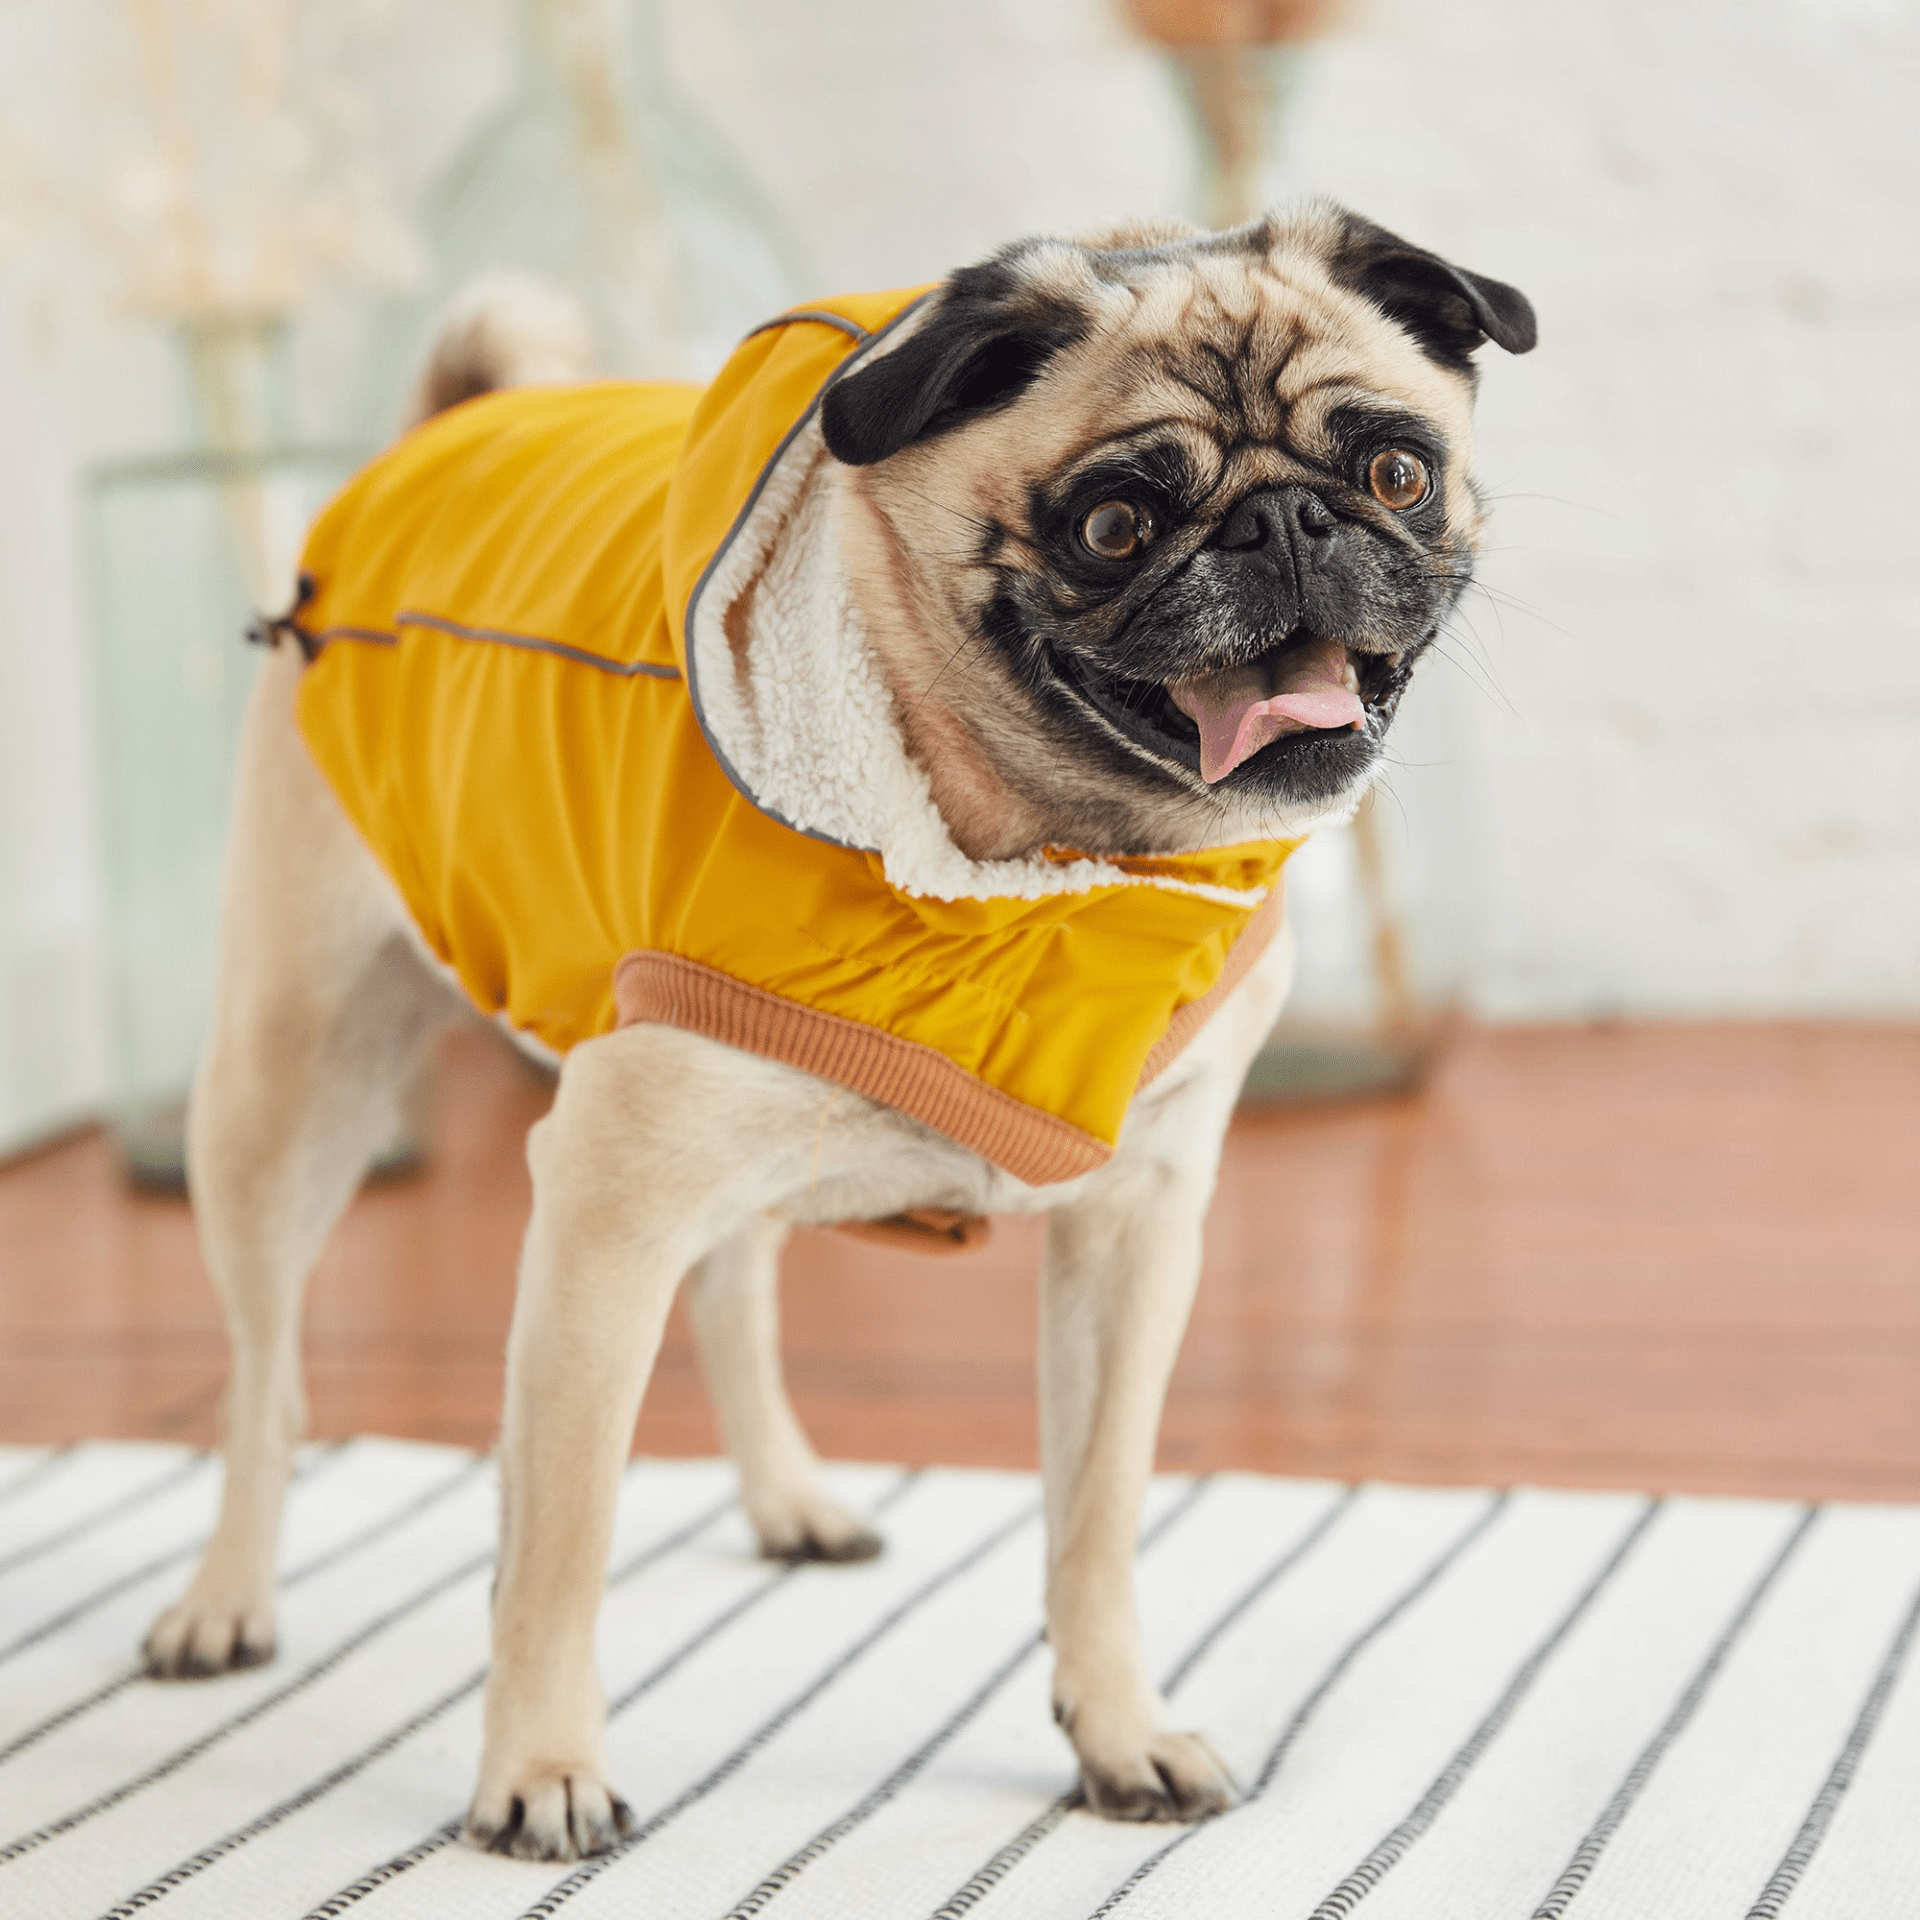 Dog and Pet Stuff Insulated Raincoat - Yellow